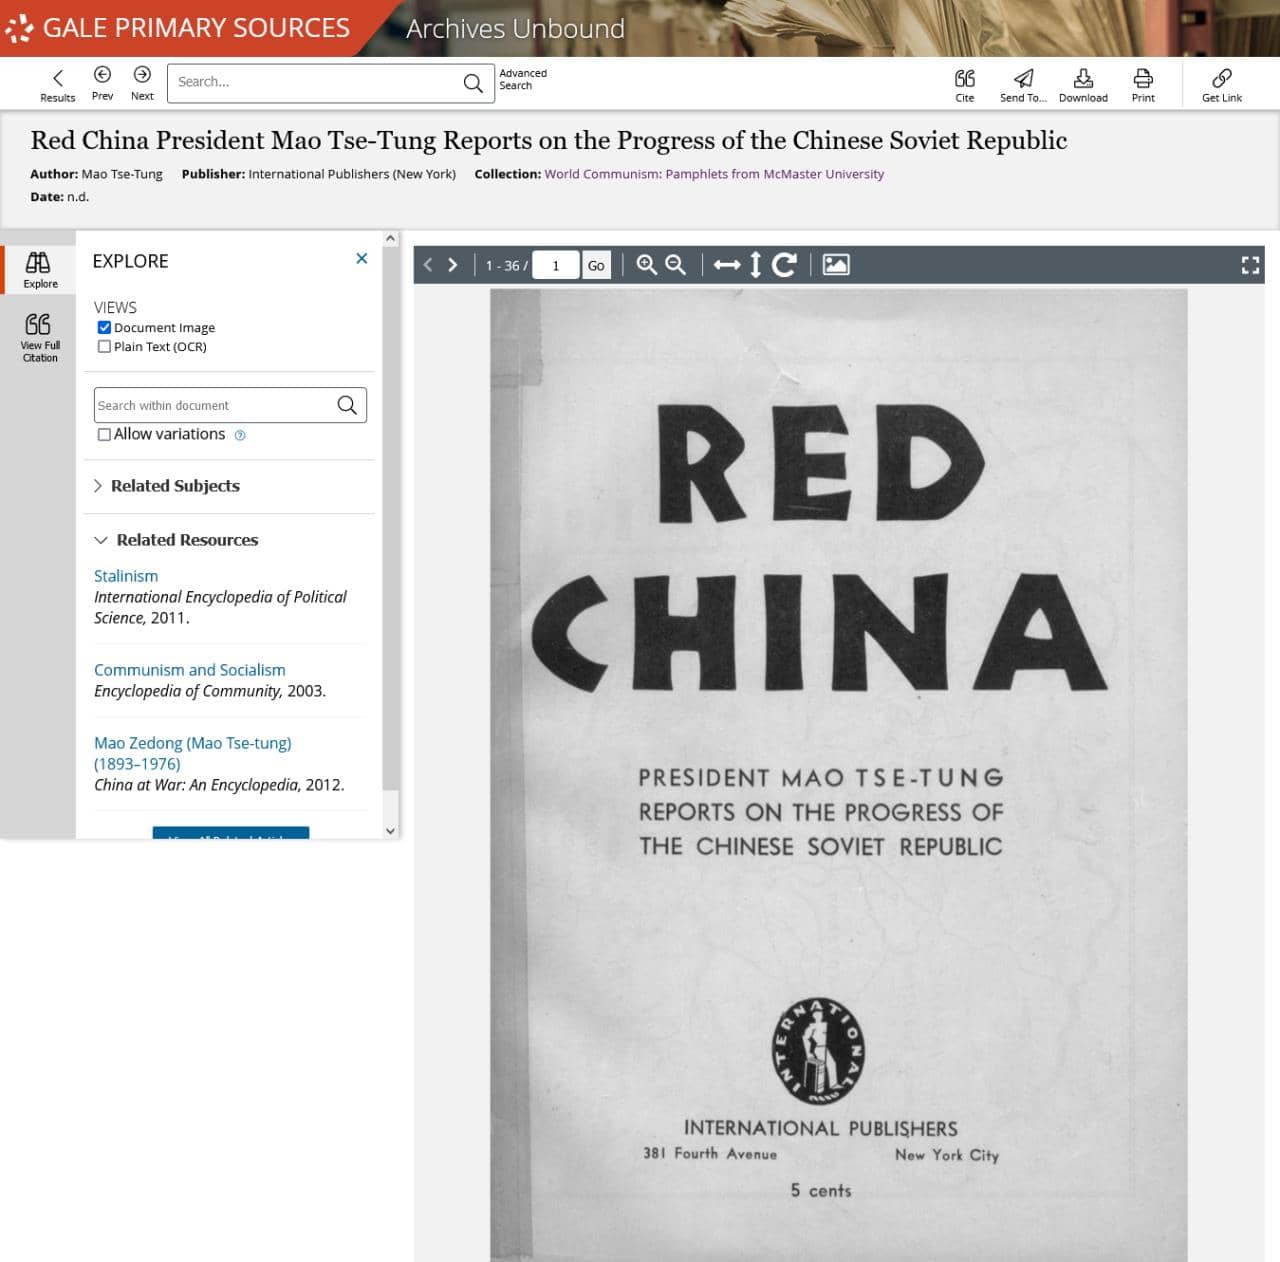 Tse-Tung, Mao. Red China President Mao Tse-Tung Reports on the Progress of the Chinese Soviet Republic. International Publishers, n.d.